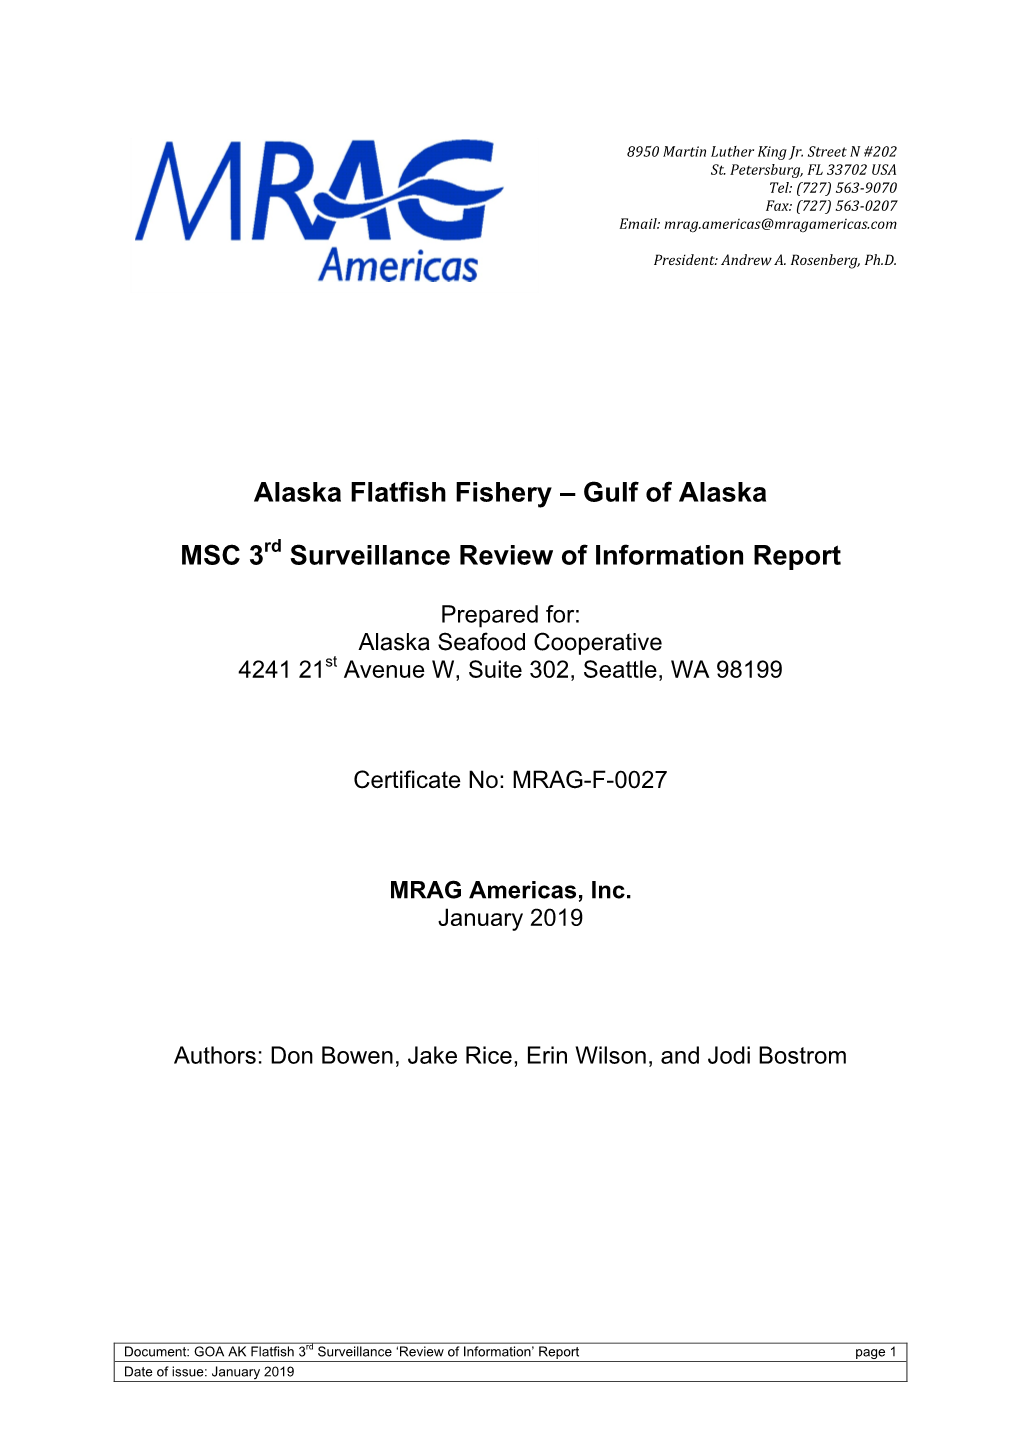 Alaska Flatfish Fishery – Gulf of Alaska MSC 3Rd Surveillance